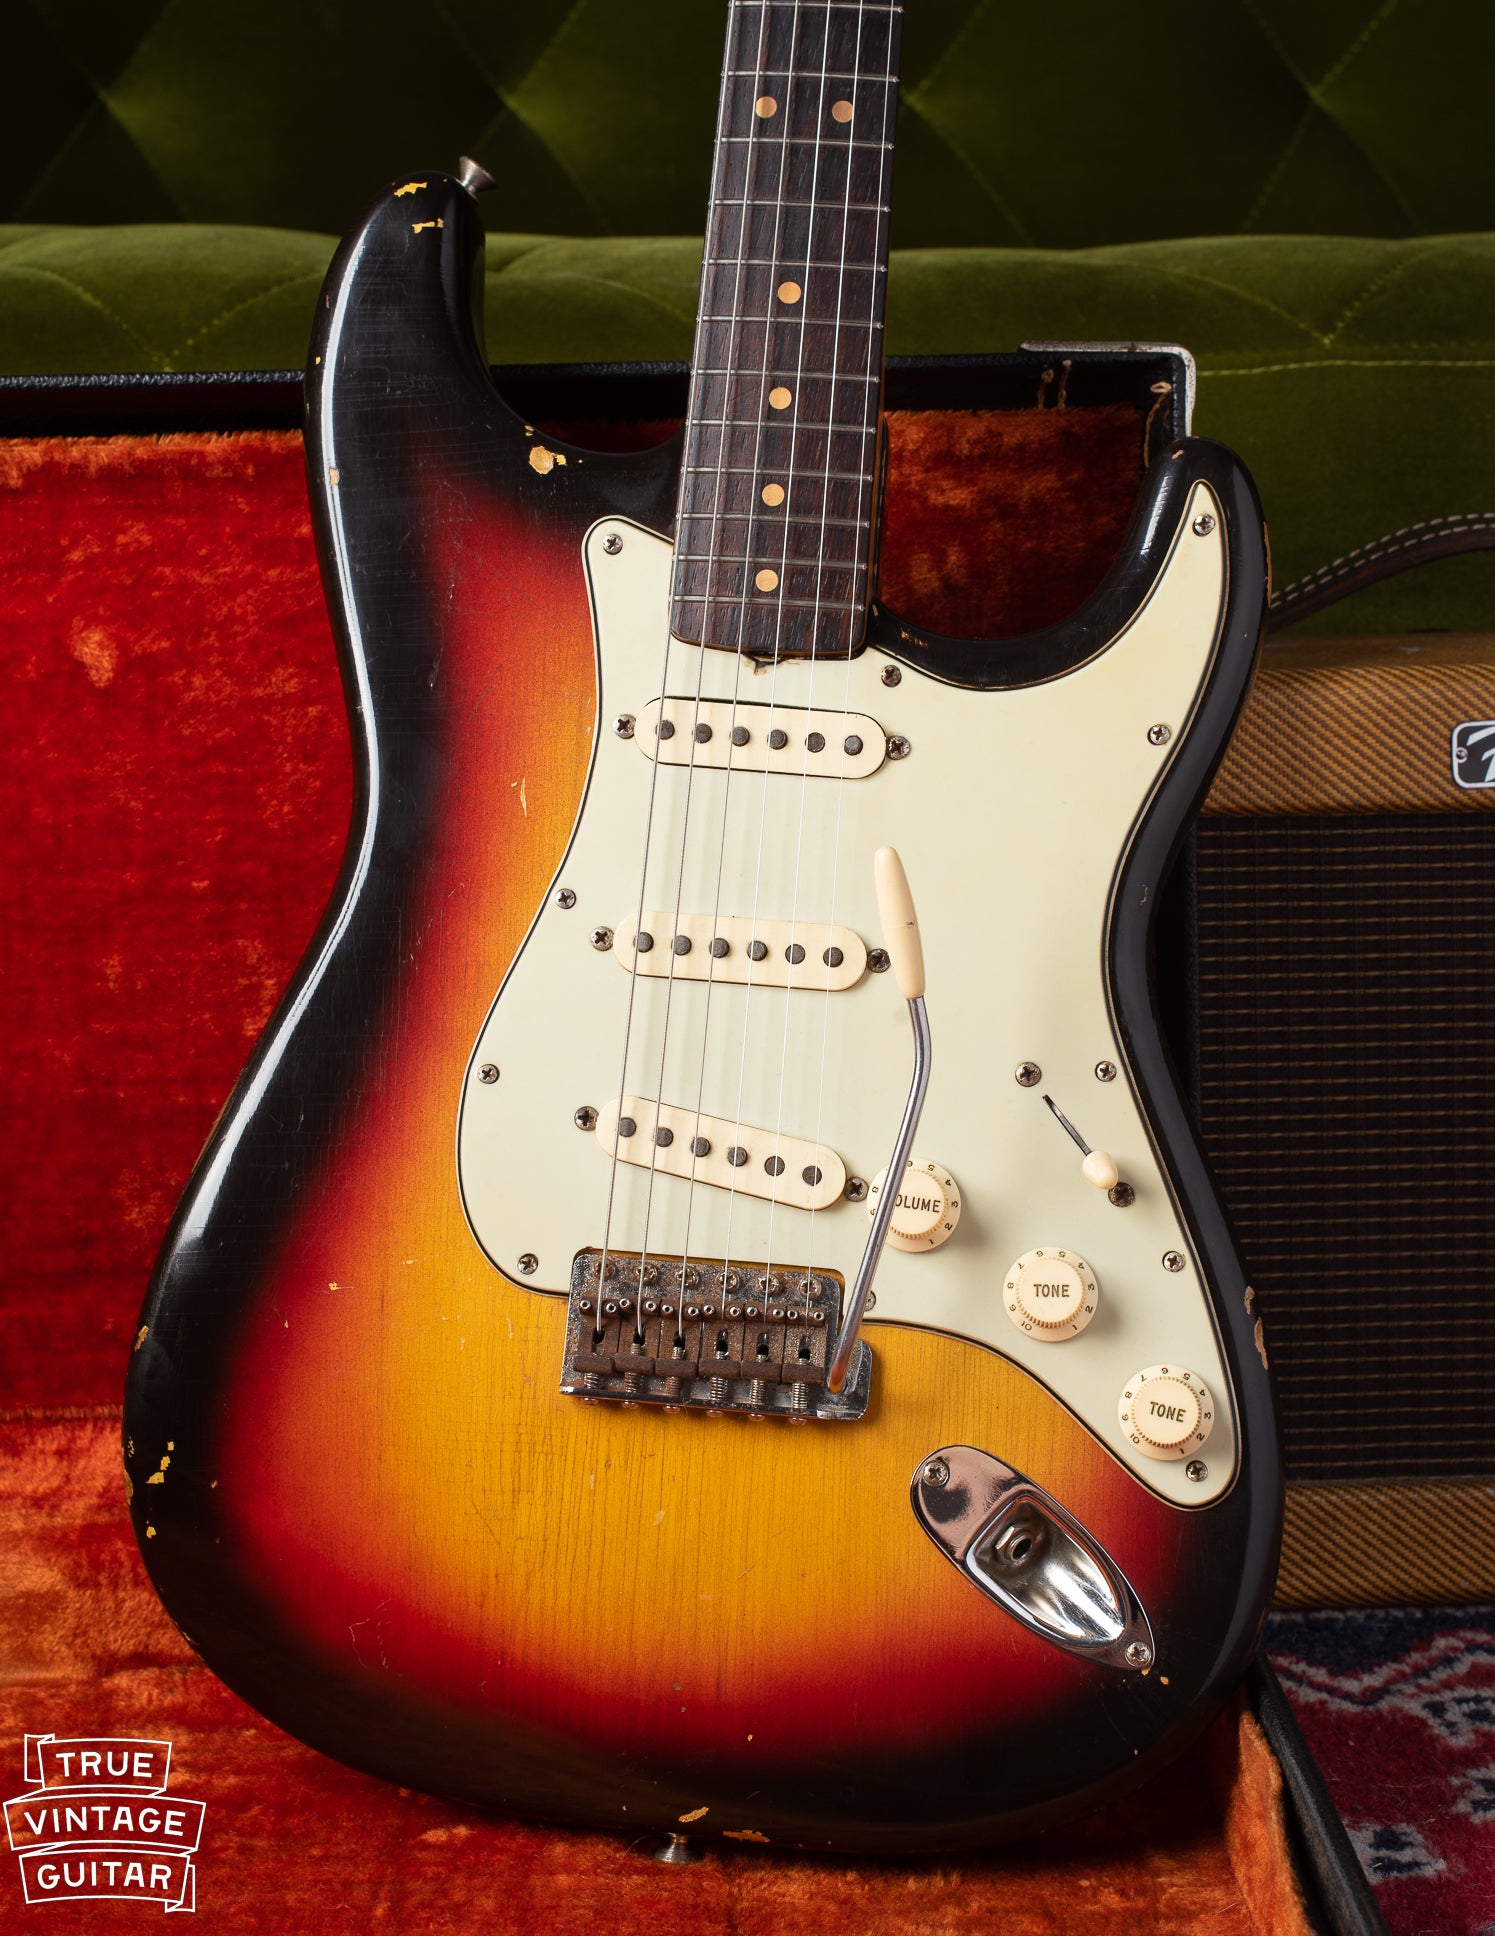 Fender Stratocaster 1963 with Sunburst finish